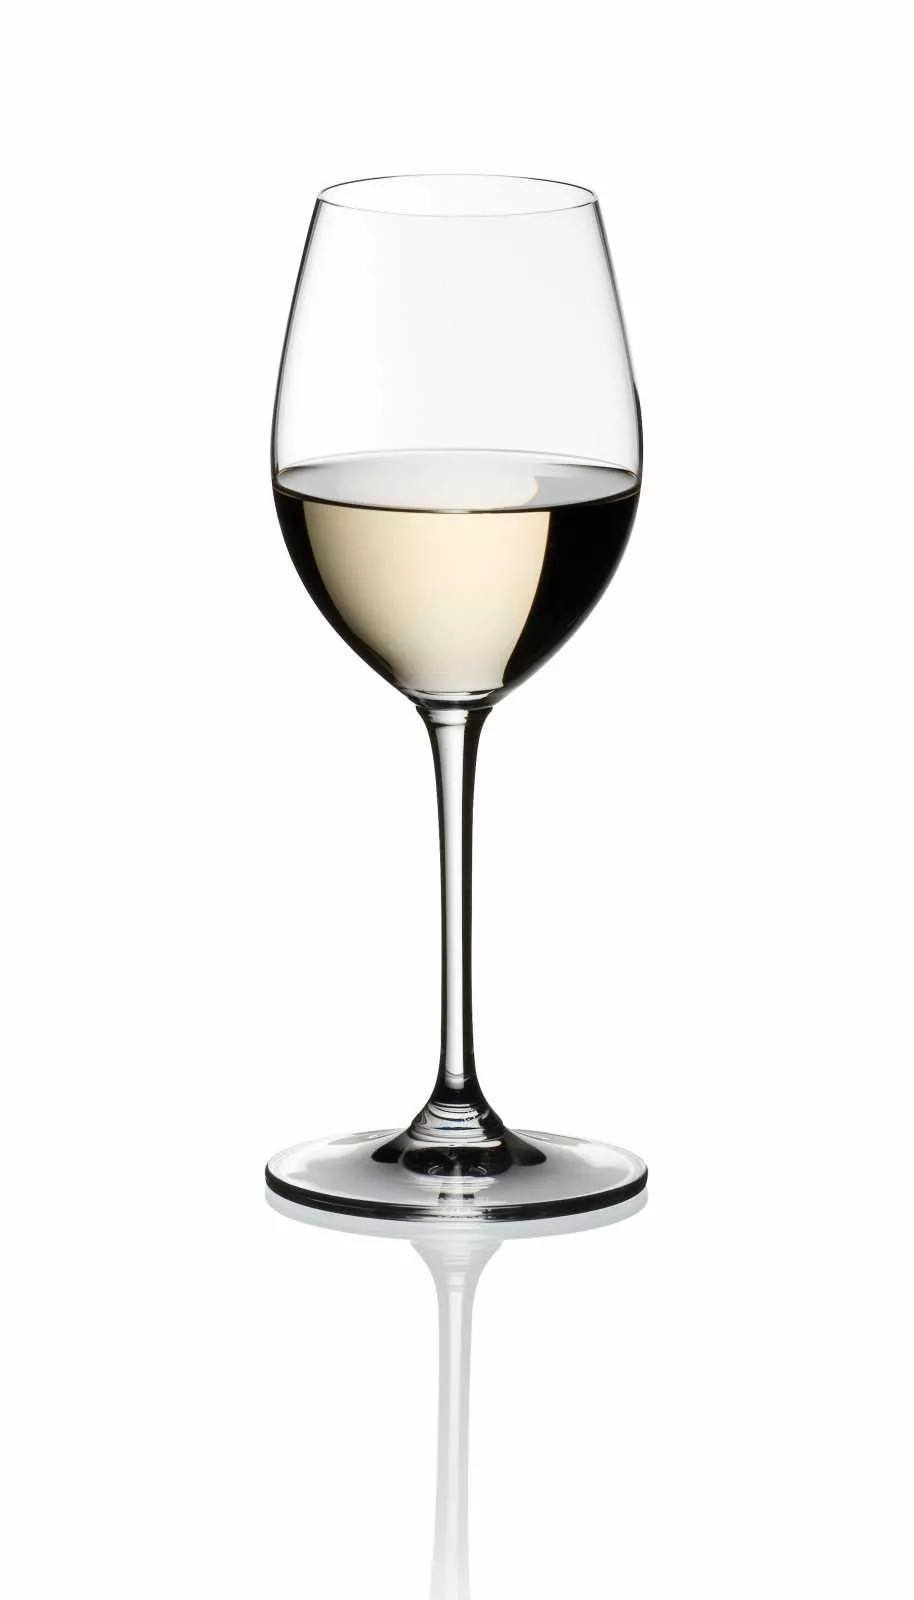 Нaбор бокалов для белого вина Sauvignon blanc Riedel Vinum, объем 0,35 л, 2 шт. (6416/33) - Фото nav 3